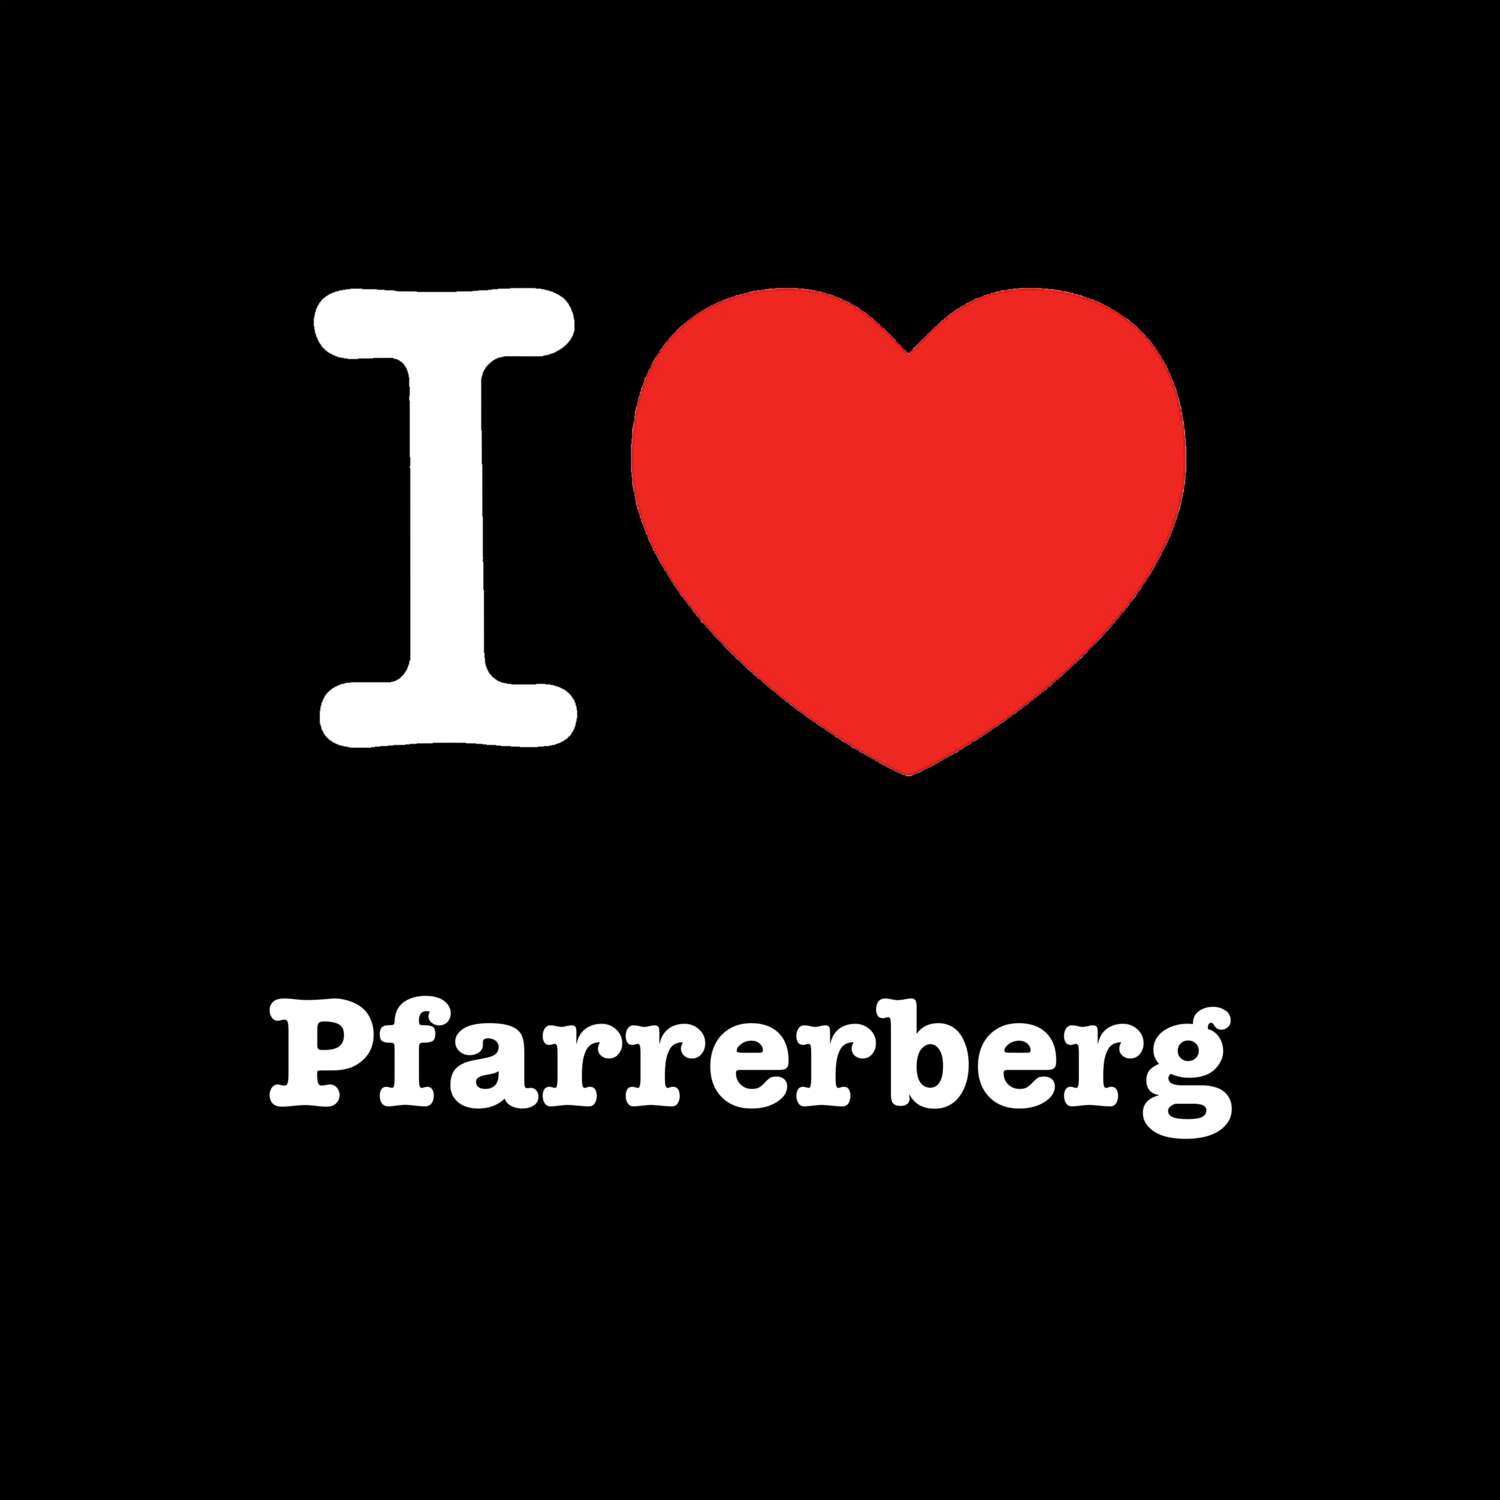 Pfarrerberg T-Shirt »I love«